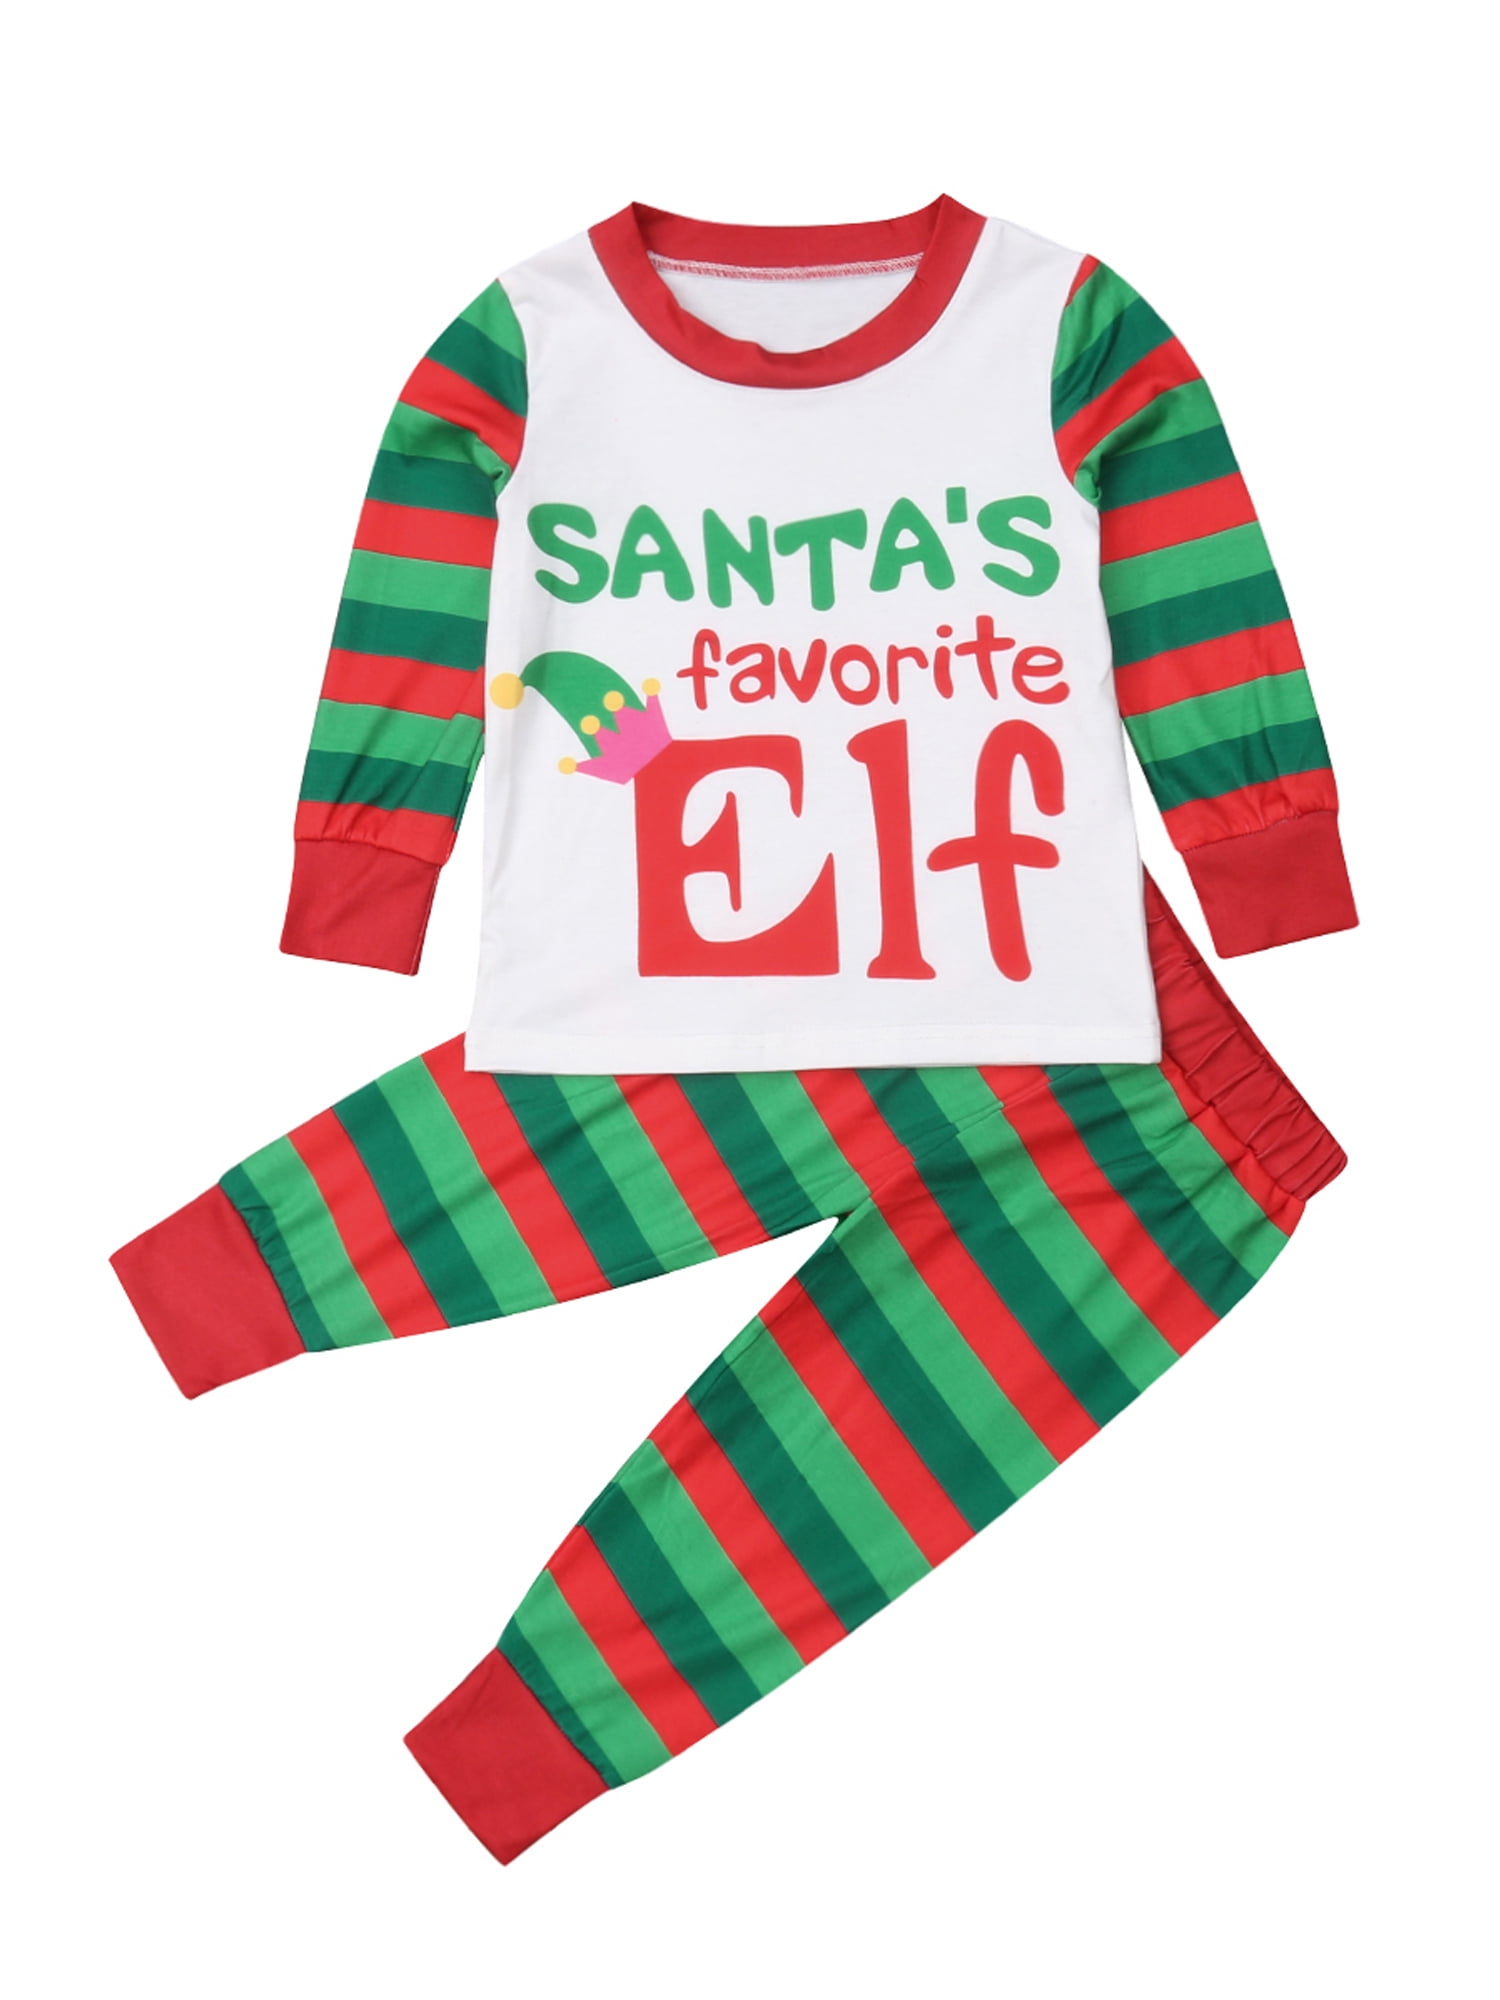 Meufam Matching Family Pajamas Sets Christmas PJ's with Elk Sleigh Printed Long Sleeve Blue Tee and Pants Sleepwear Outfits